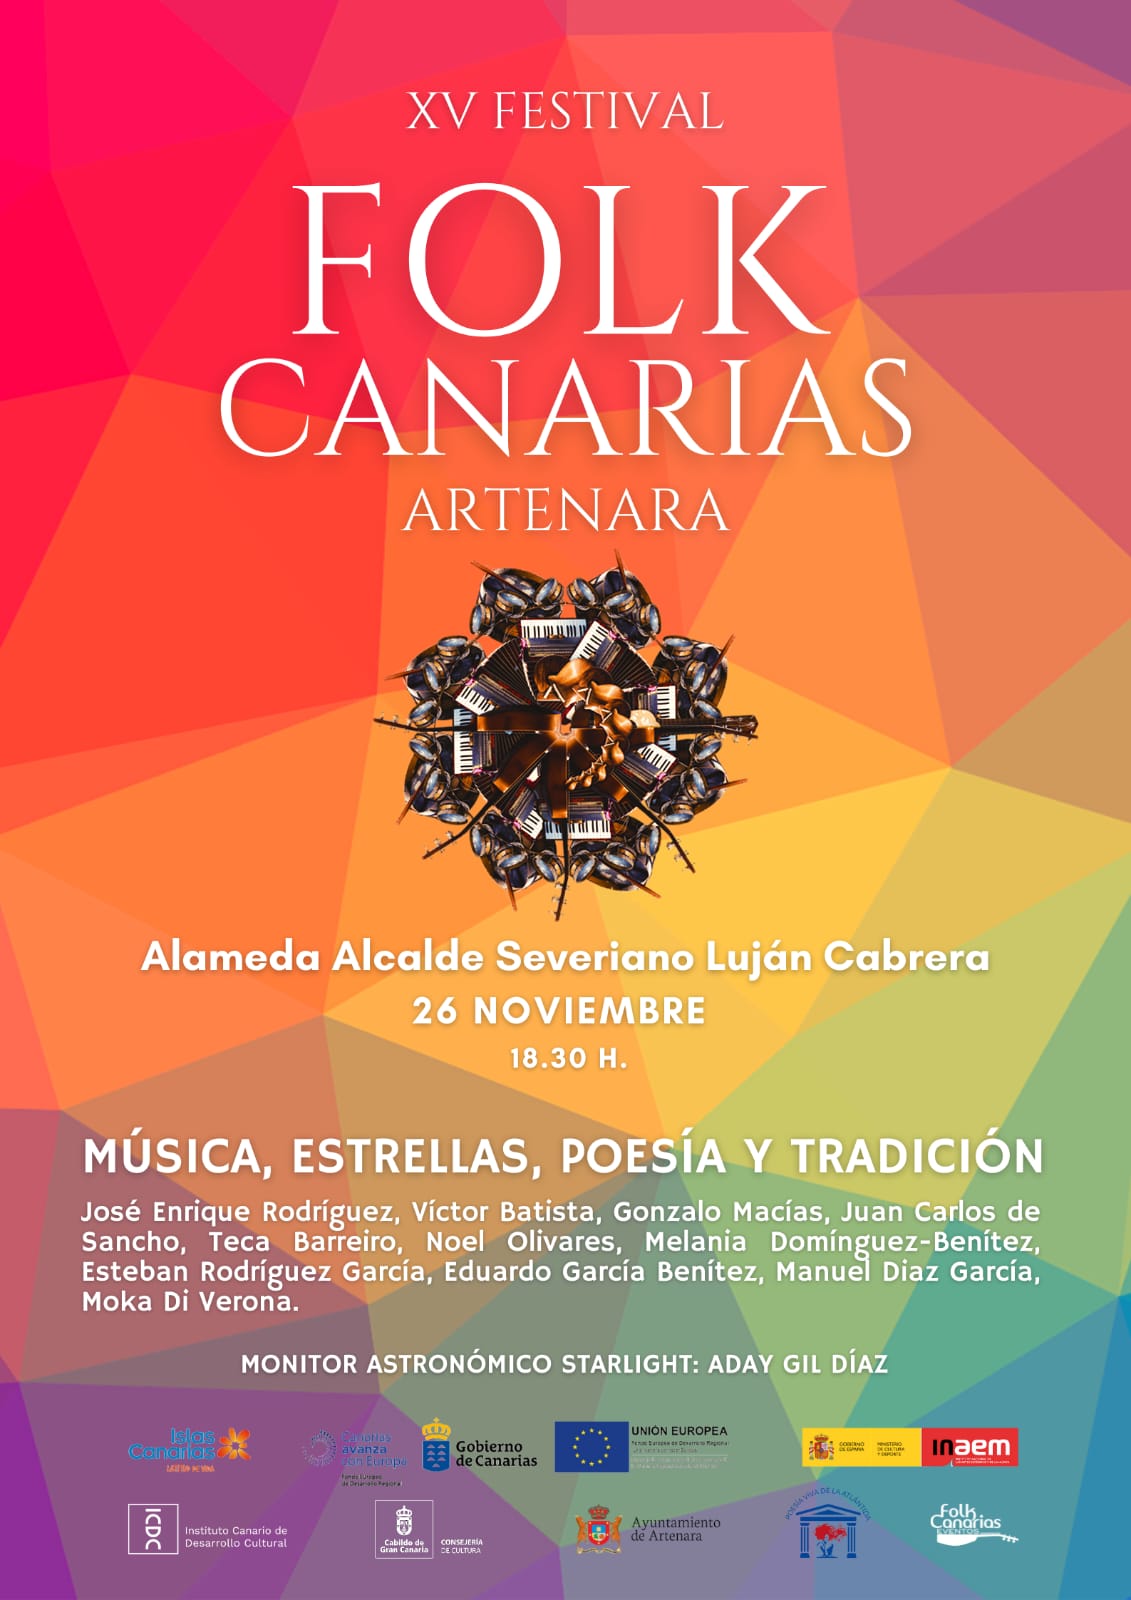 XV FESTIVAL FOLK CANARIAS